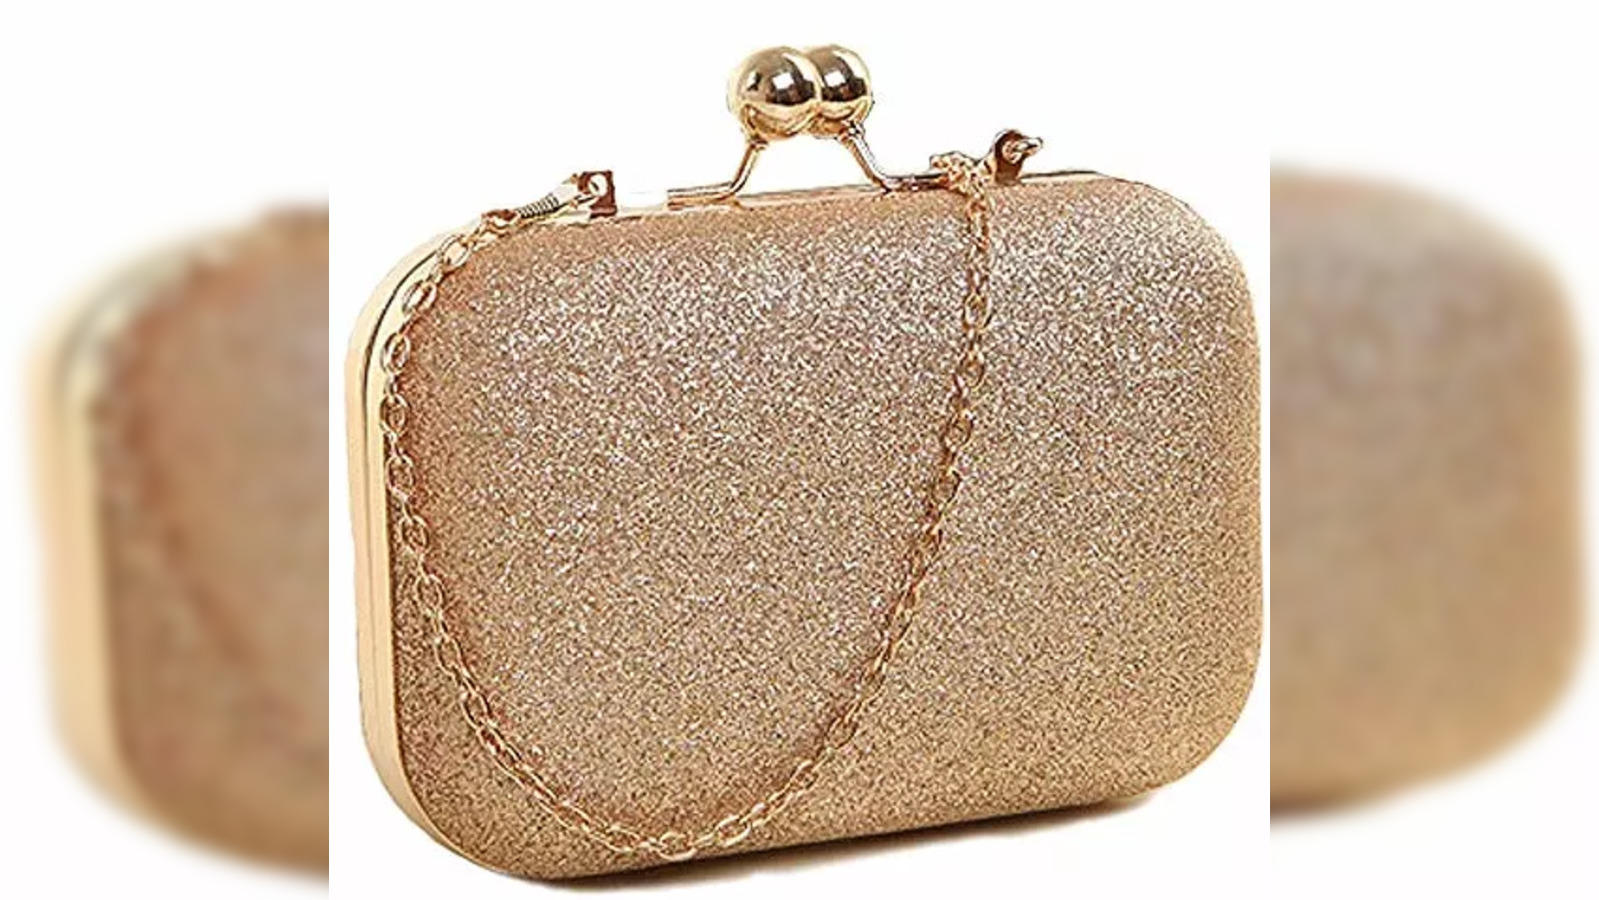 Designer Diamond Diamante Evening Bag For Women Top Quality Glitter Canvas  Hobo Shoulder Bag With Crystal Embellishments C2628 From Asert, $62.95 |  DHgate.Com